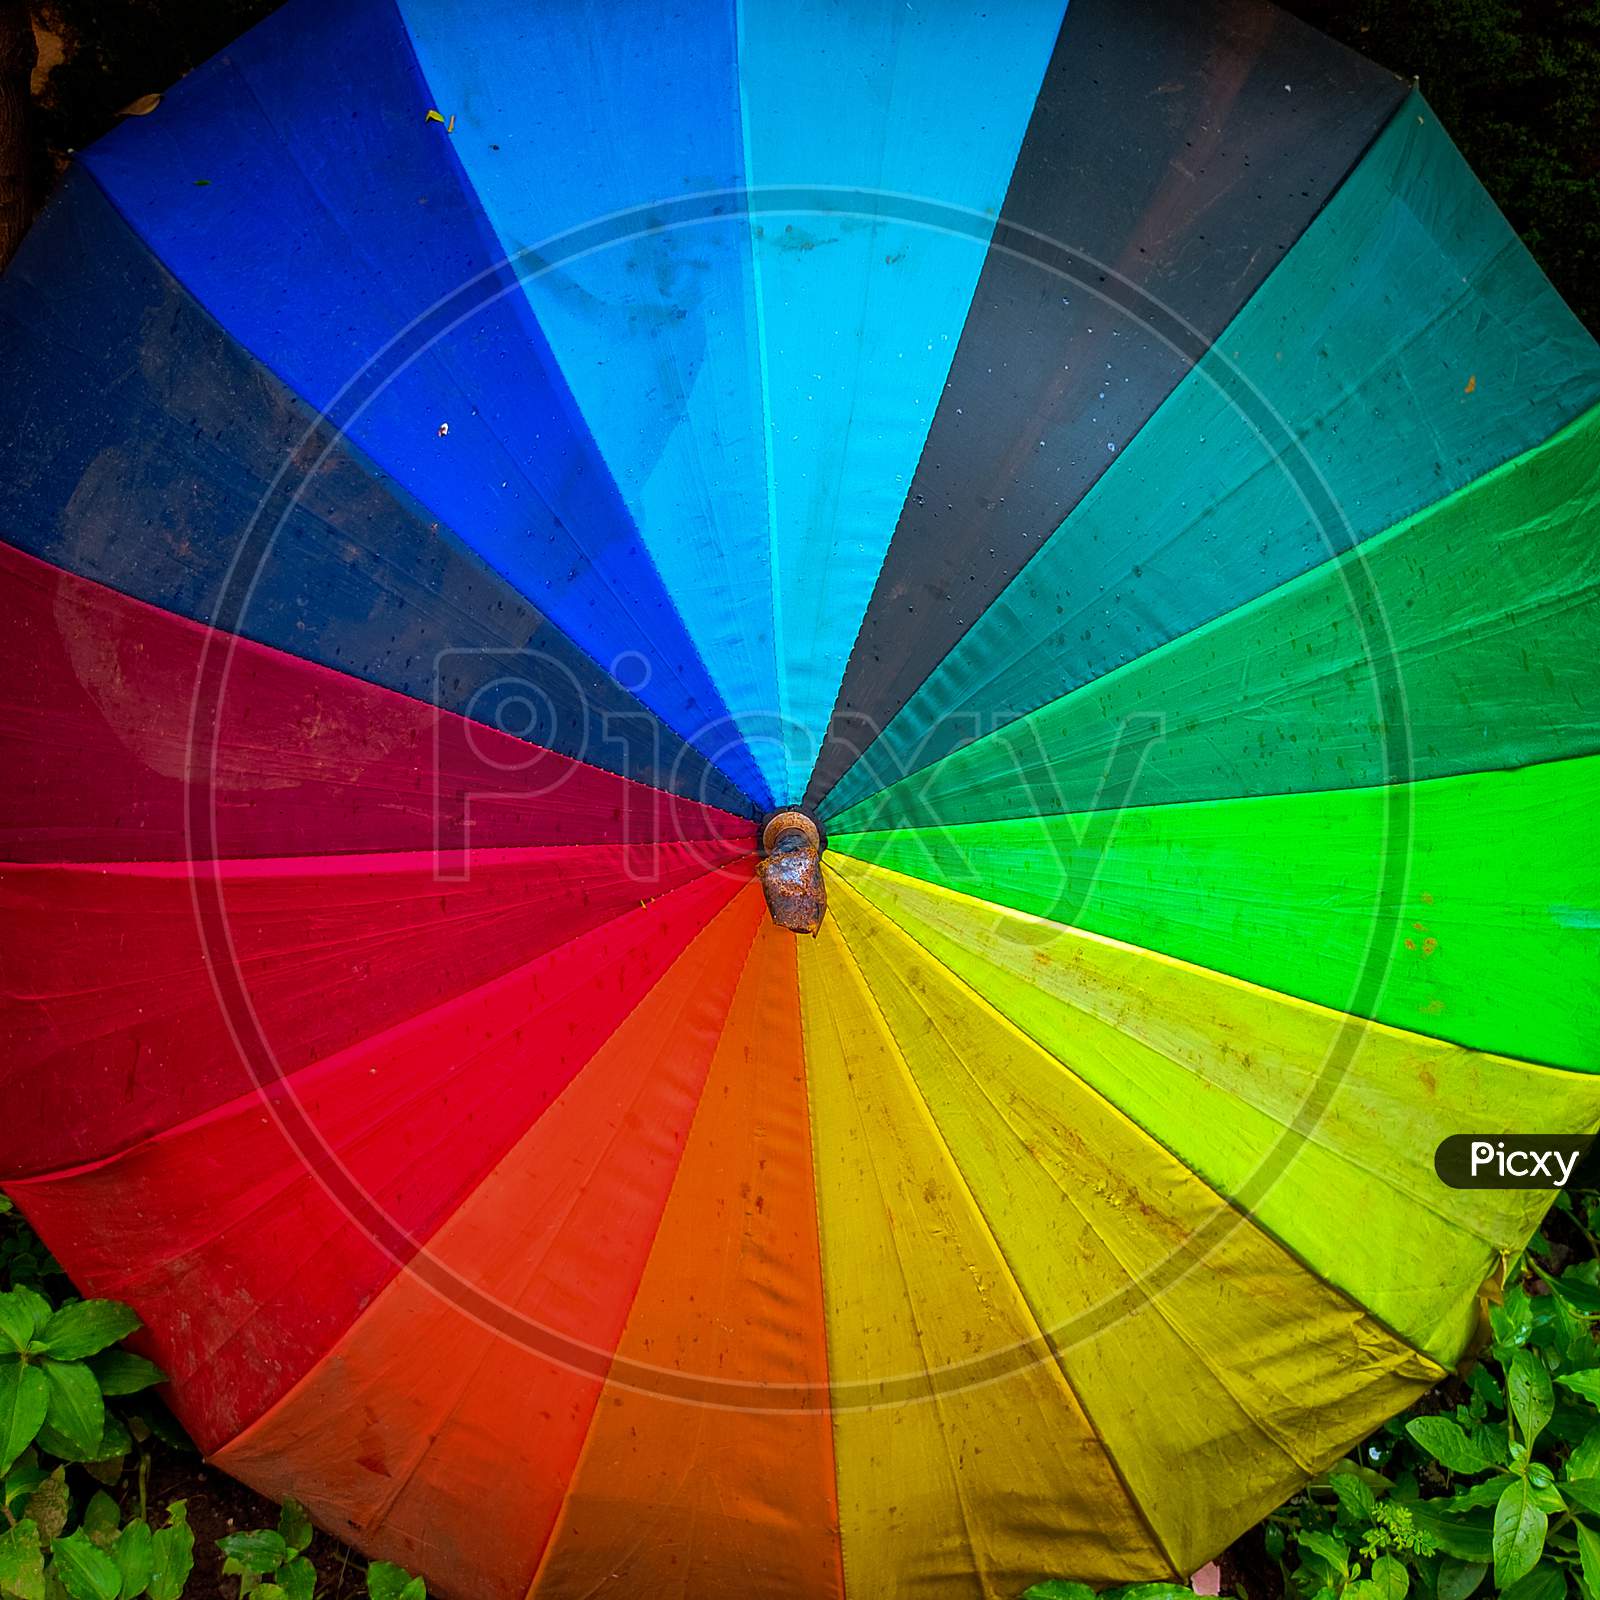 Colourful Umbrella